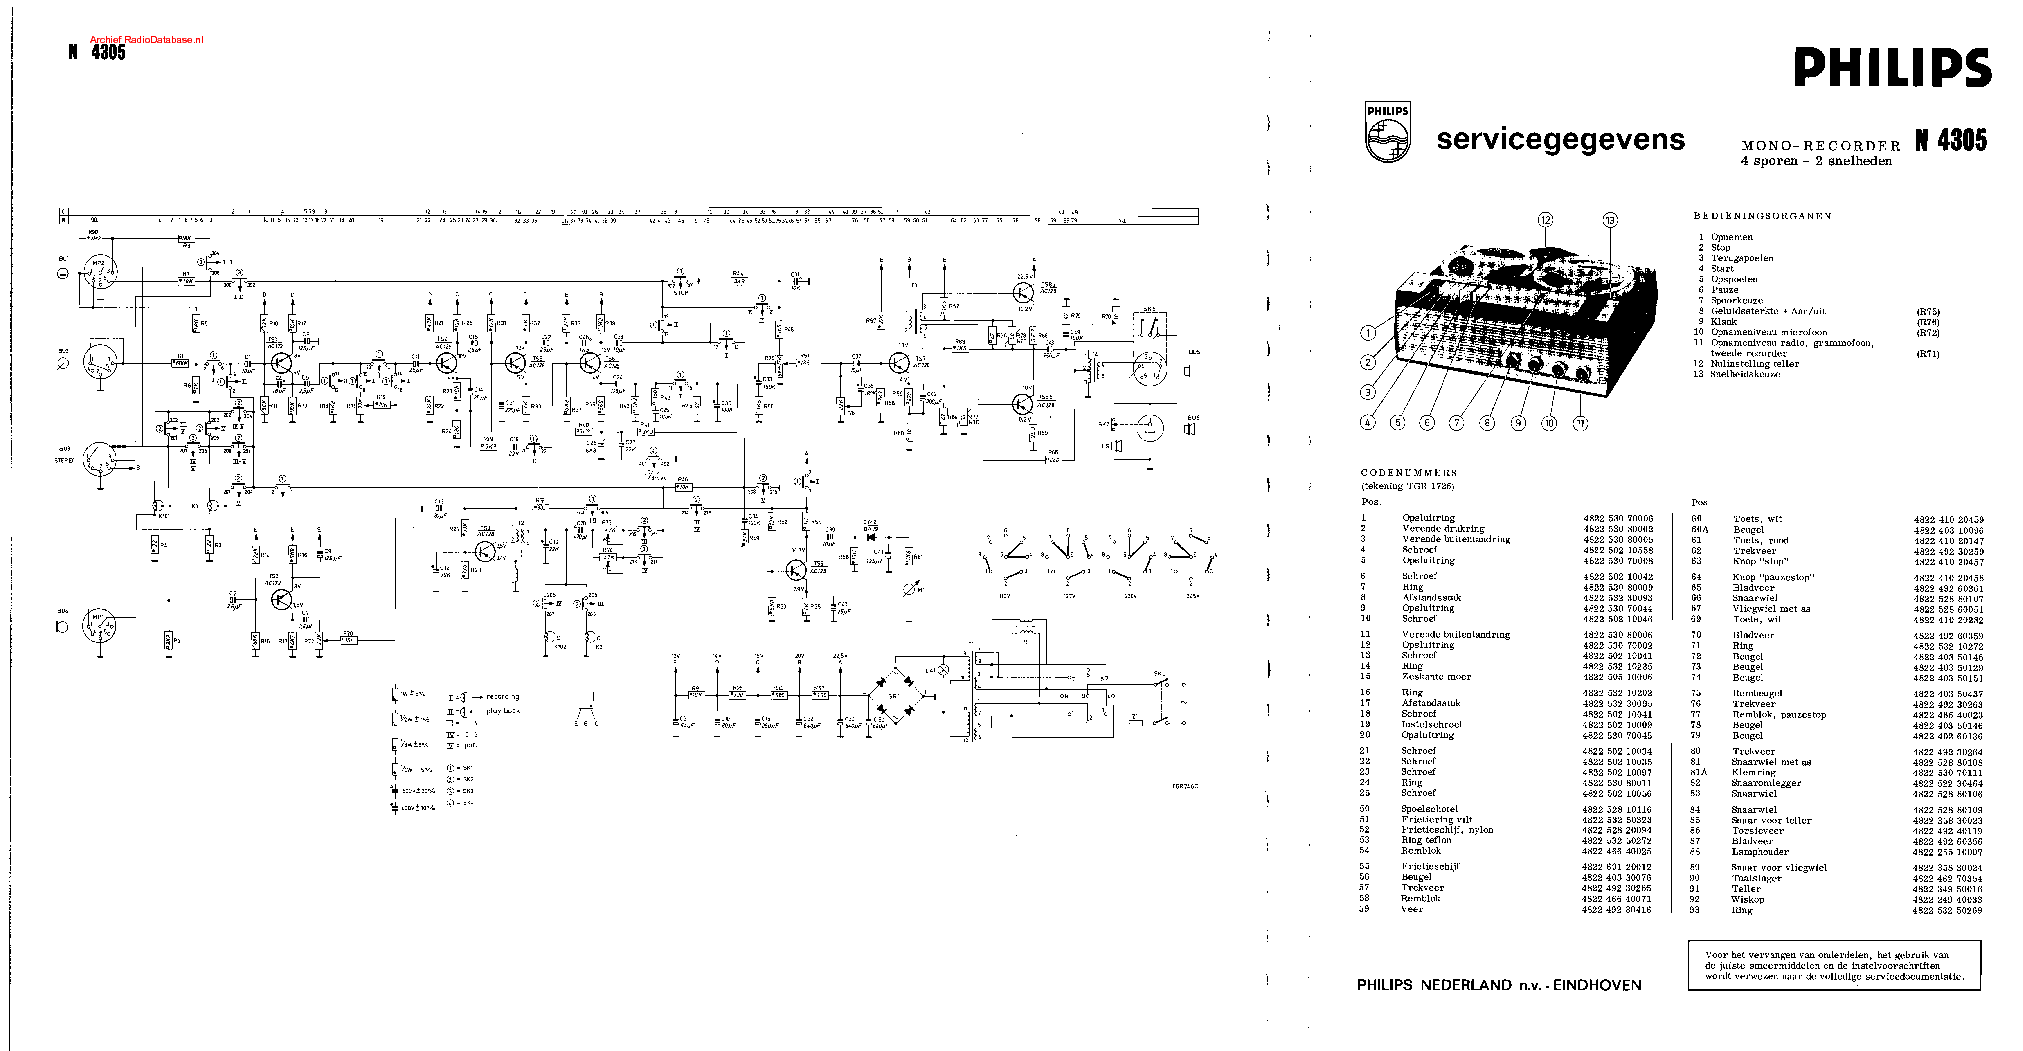 PHILIPS N4305 MONO-RECORDER MAGNETOFON SM service manual (1st page)